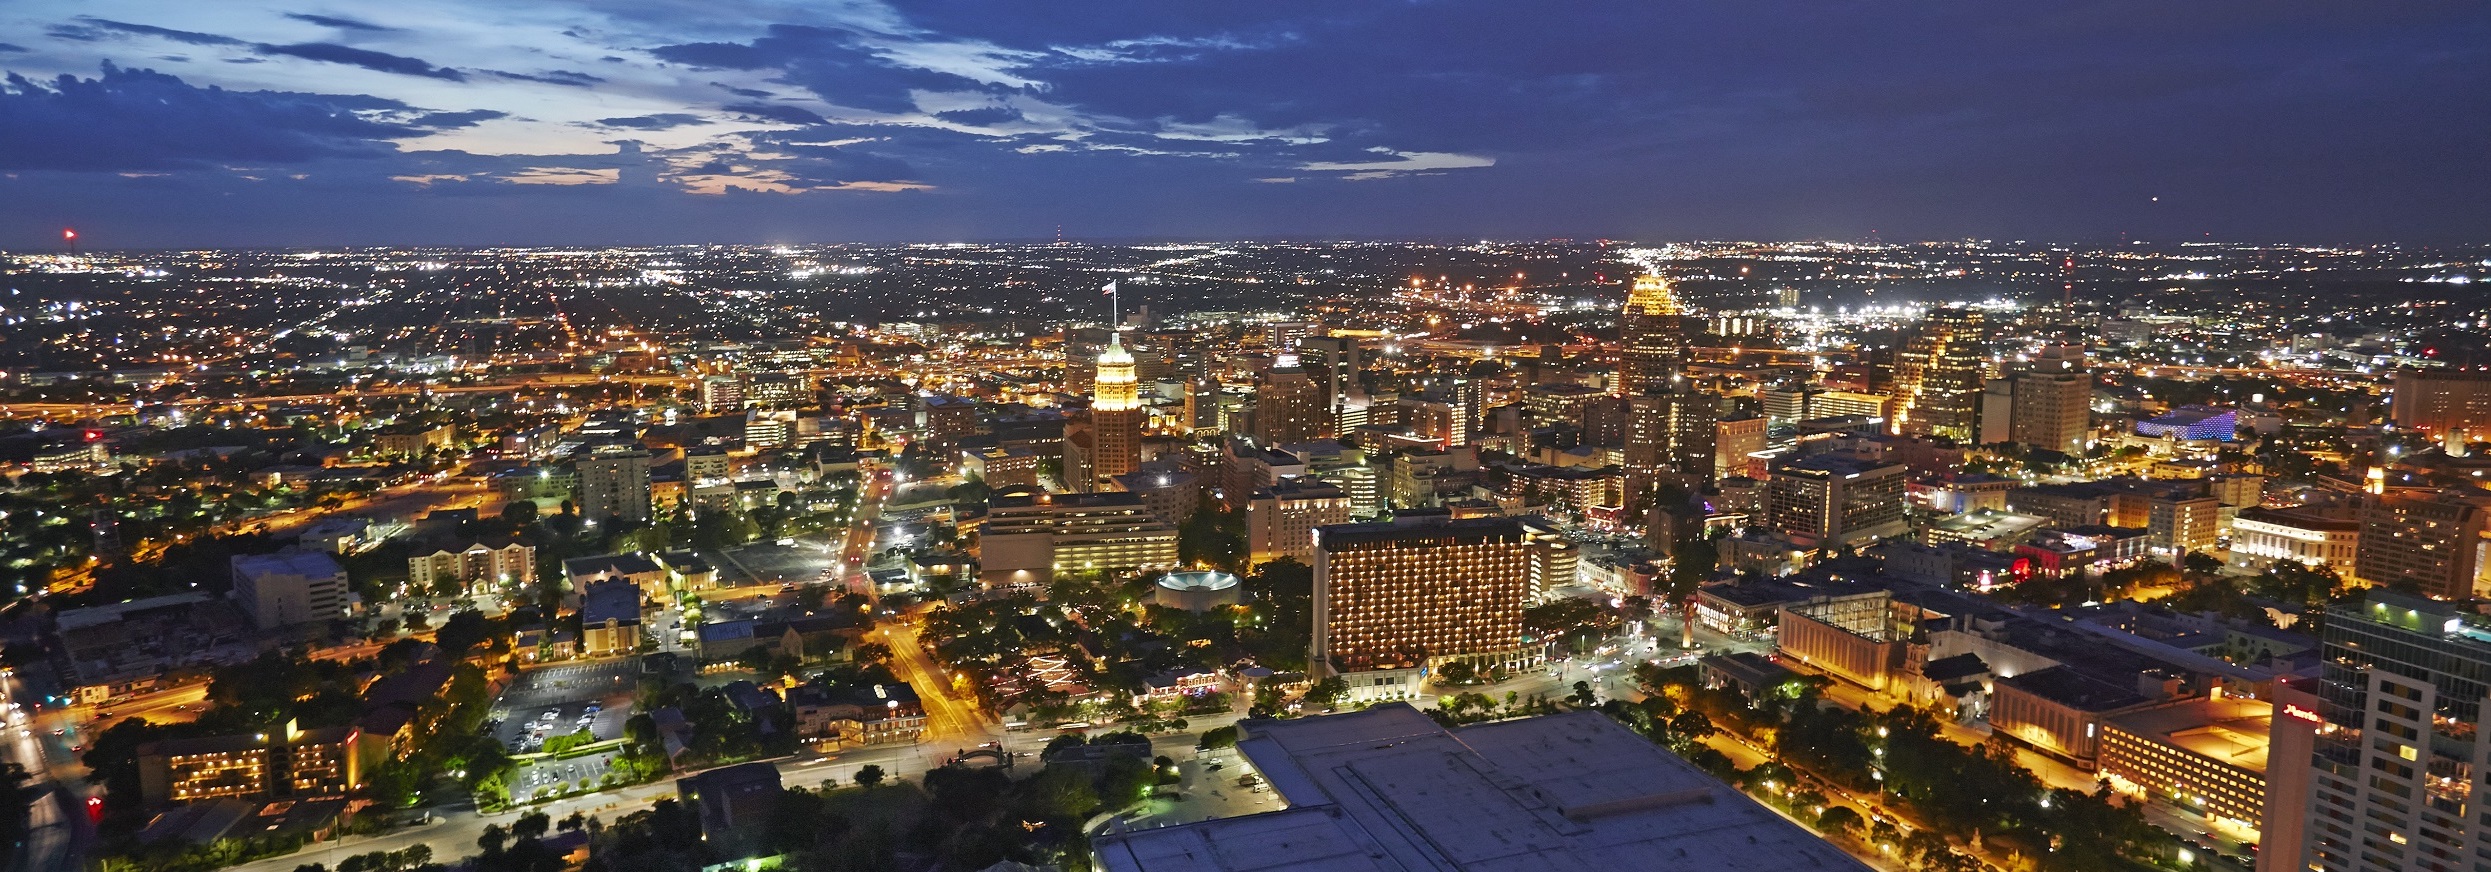 Elevated cityscape of dowtown San Antonio